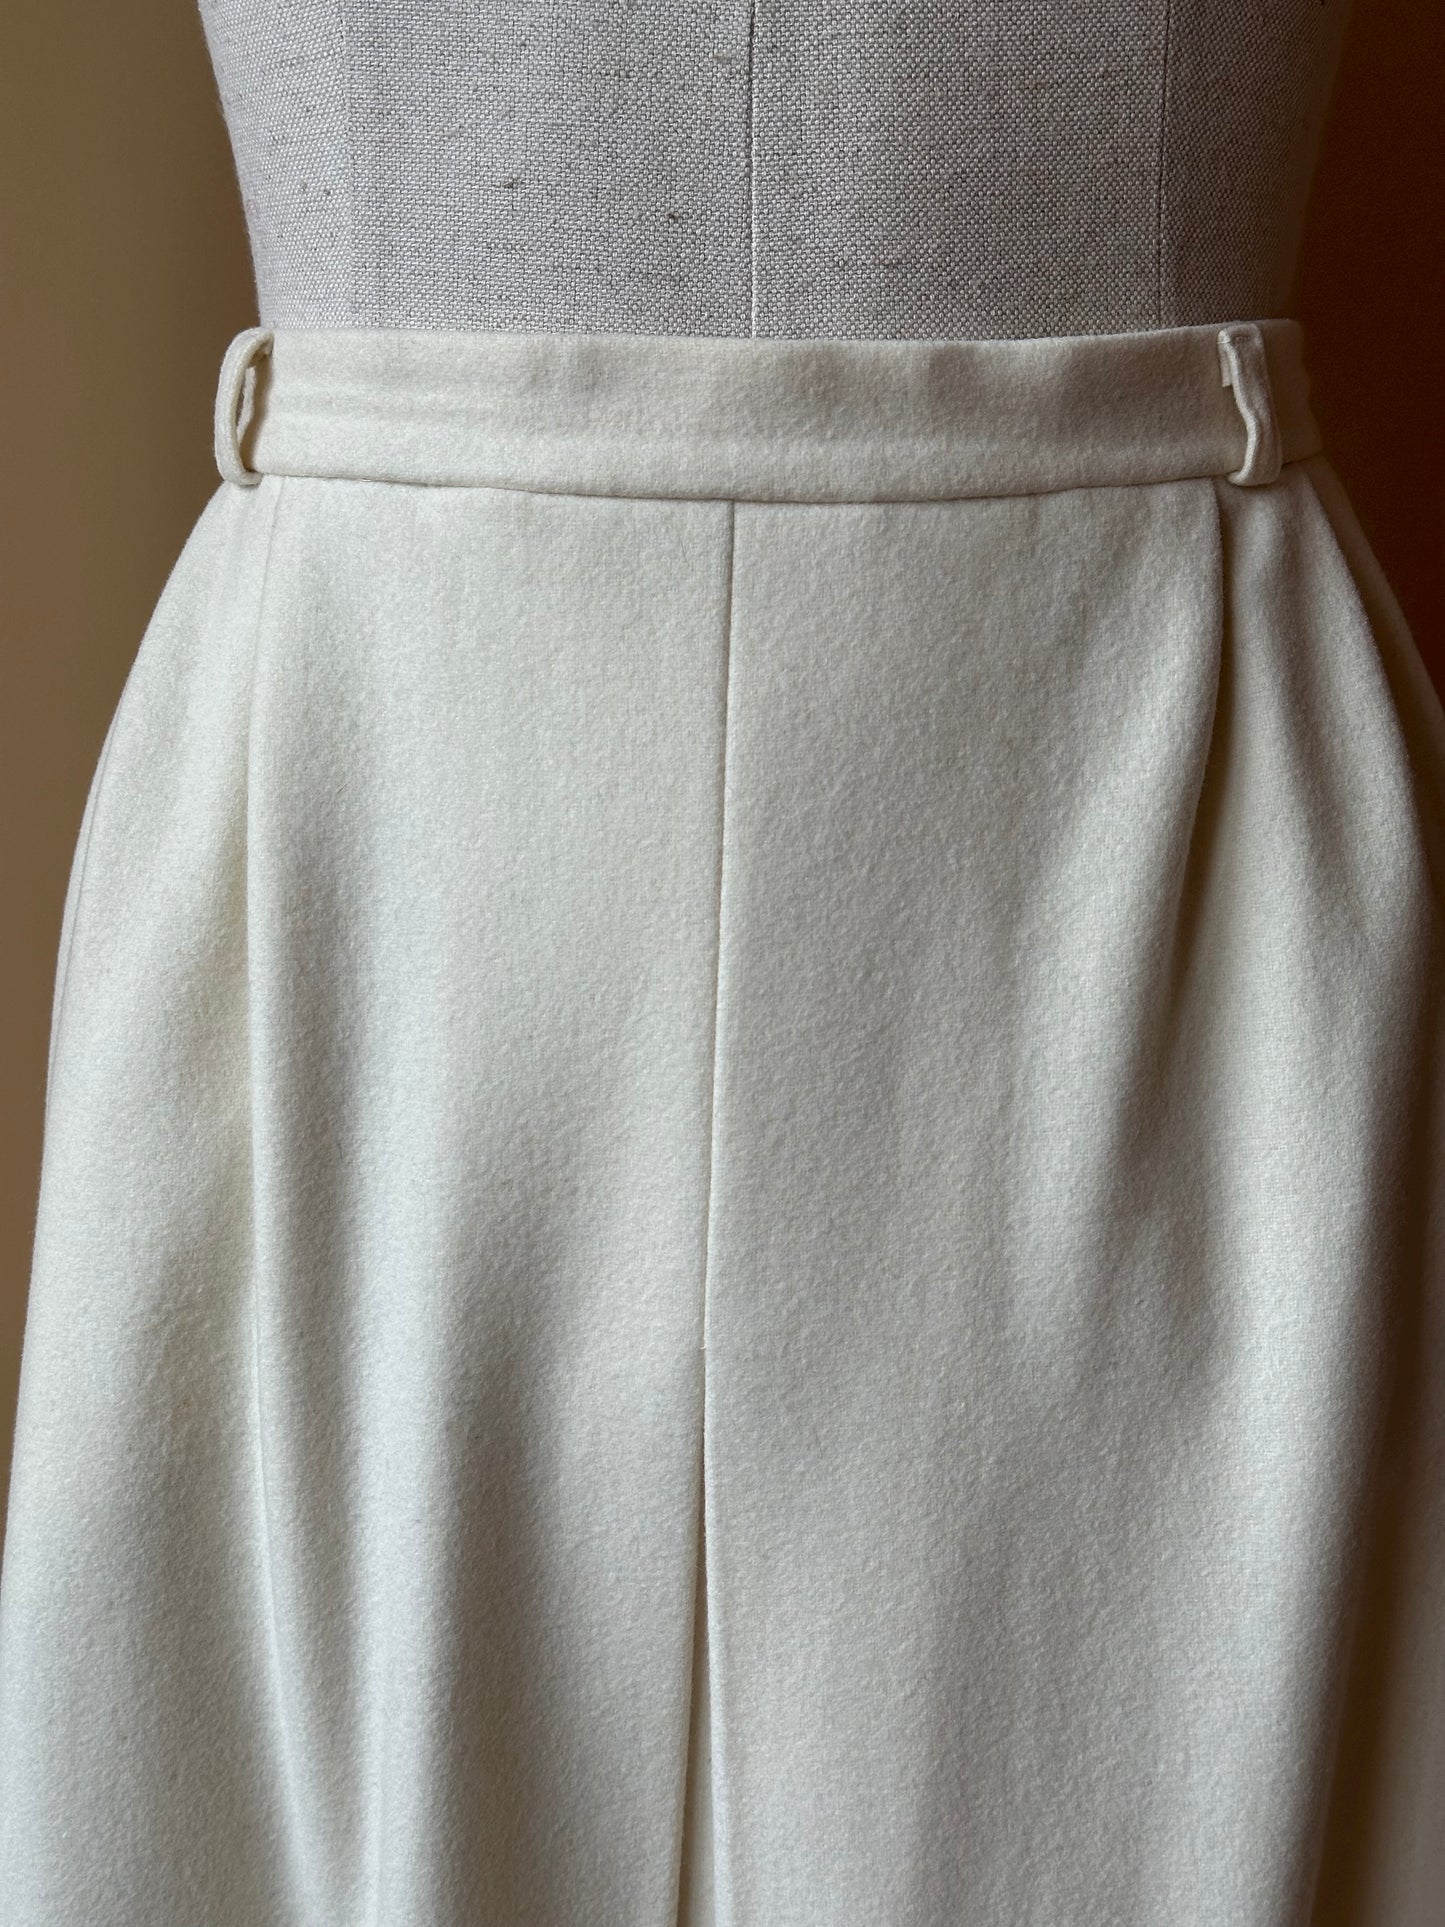 Vintage White Woolen Midi Skirt